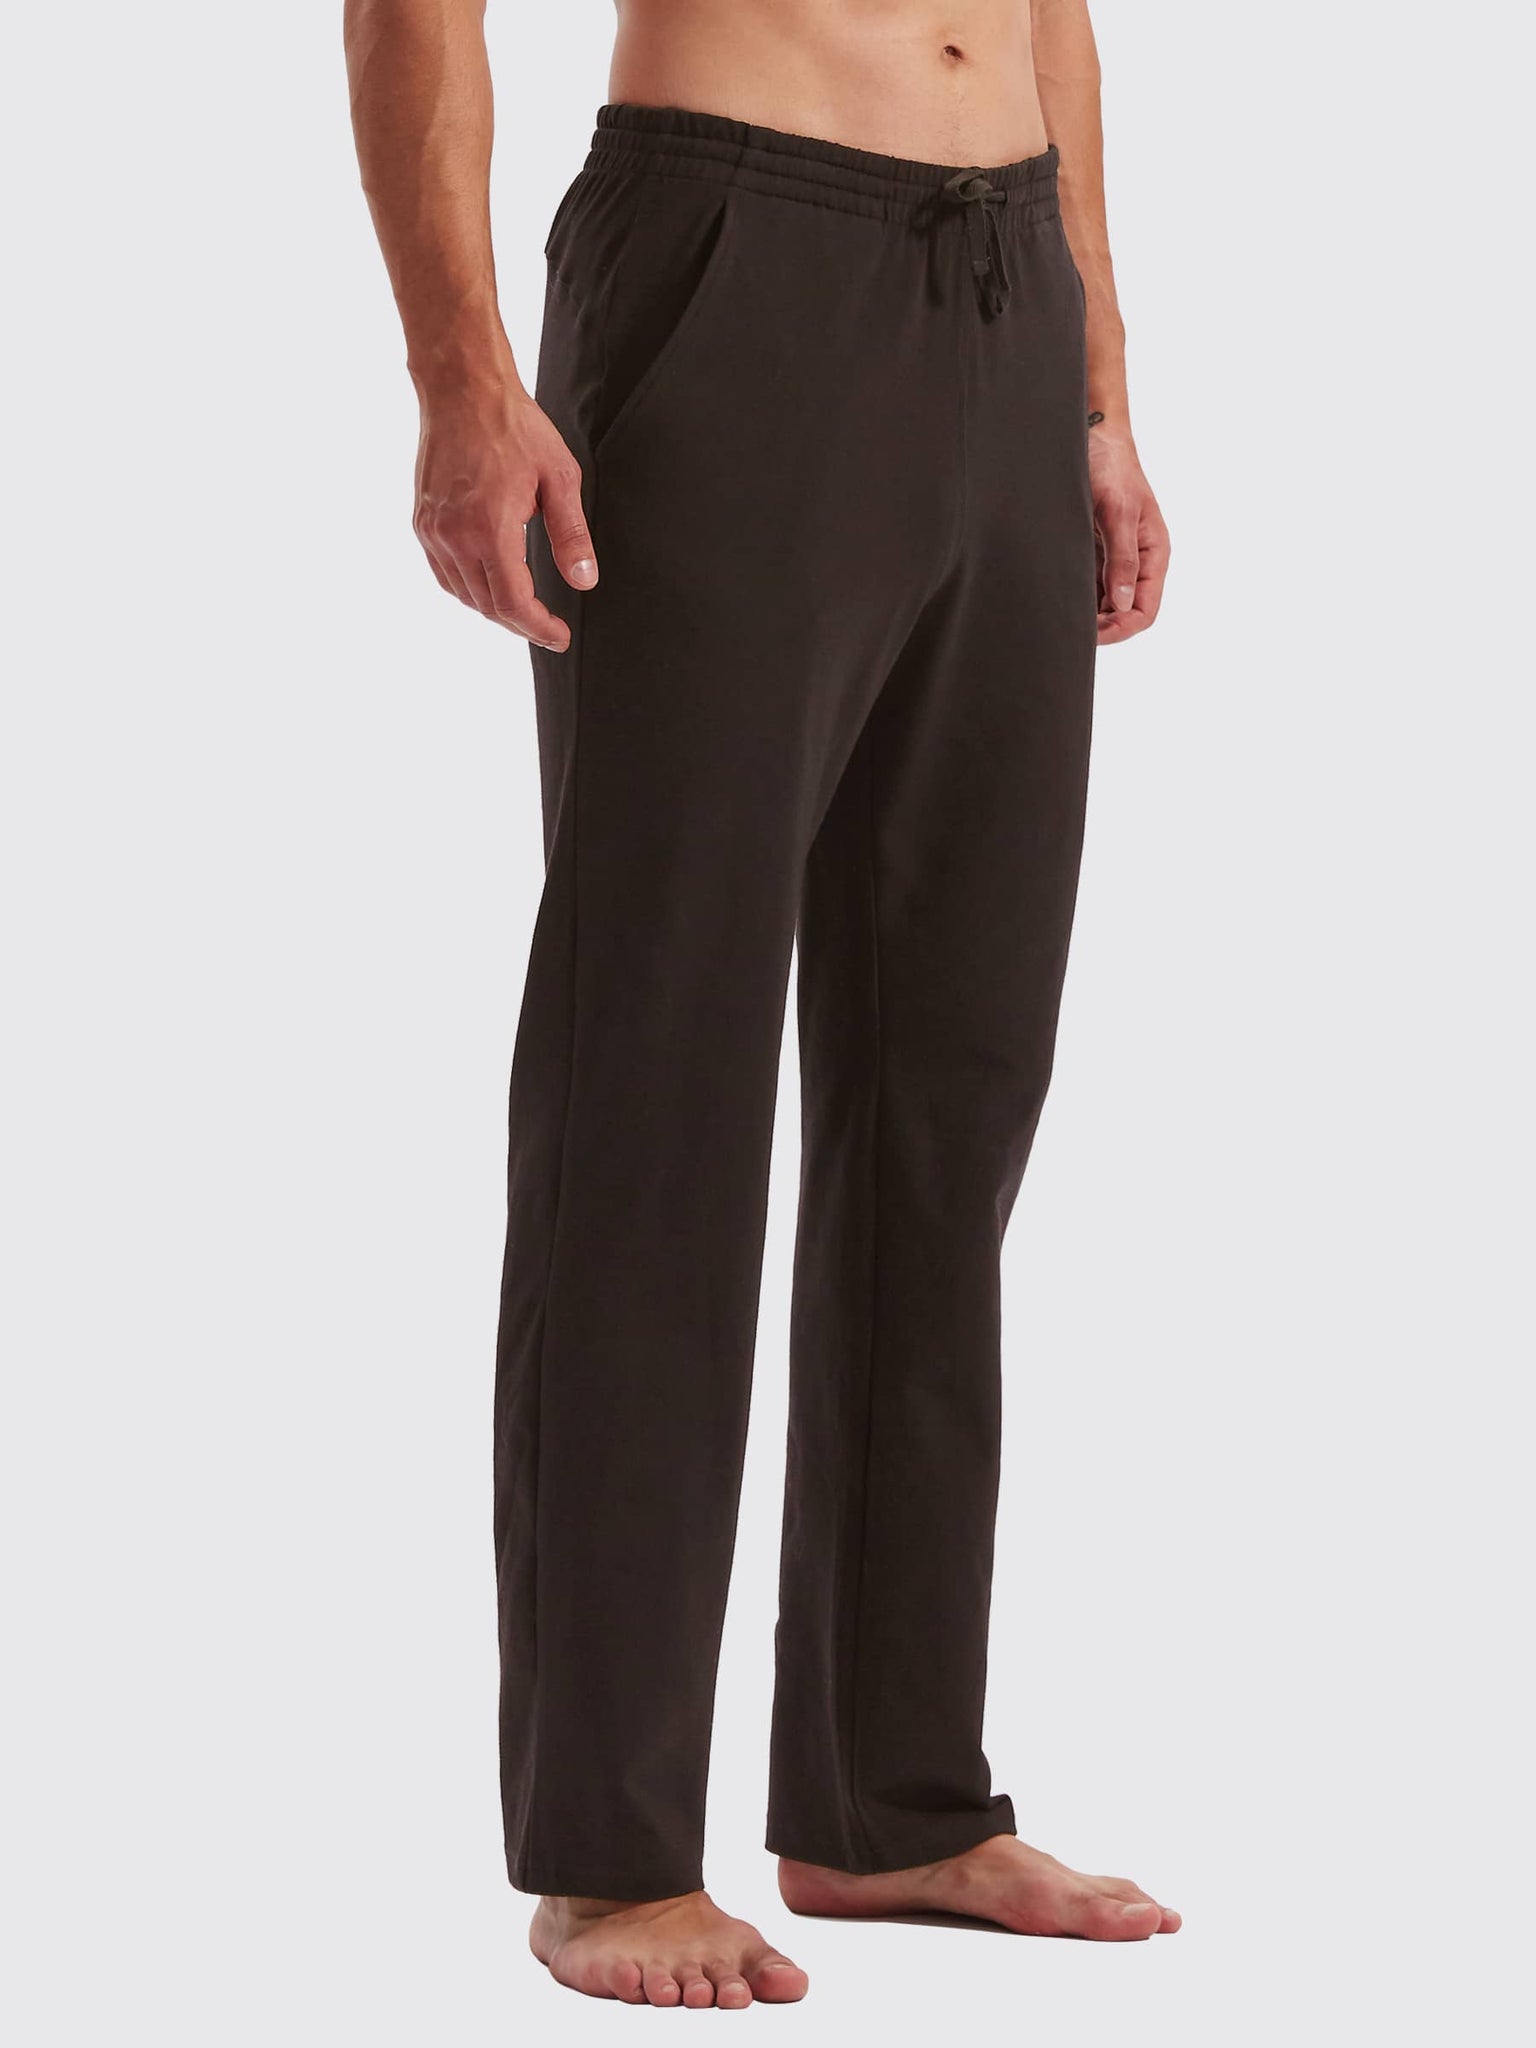 Men's Cotton Yoga Balance Sweatpants_Brown_model3